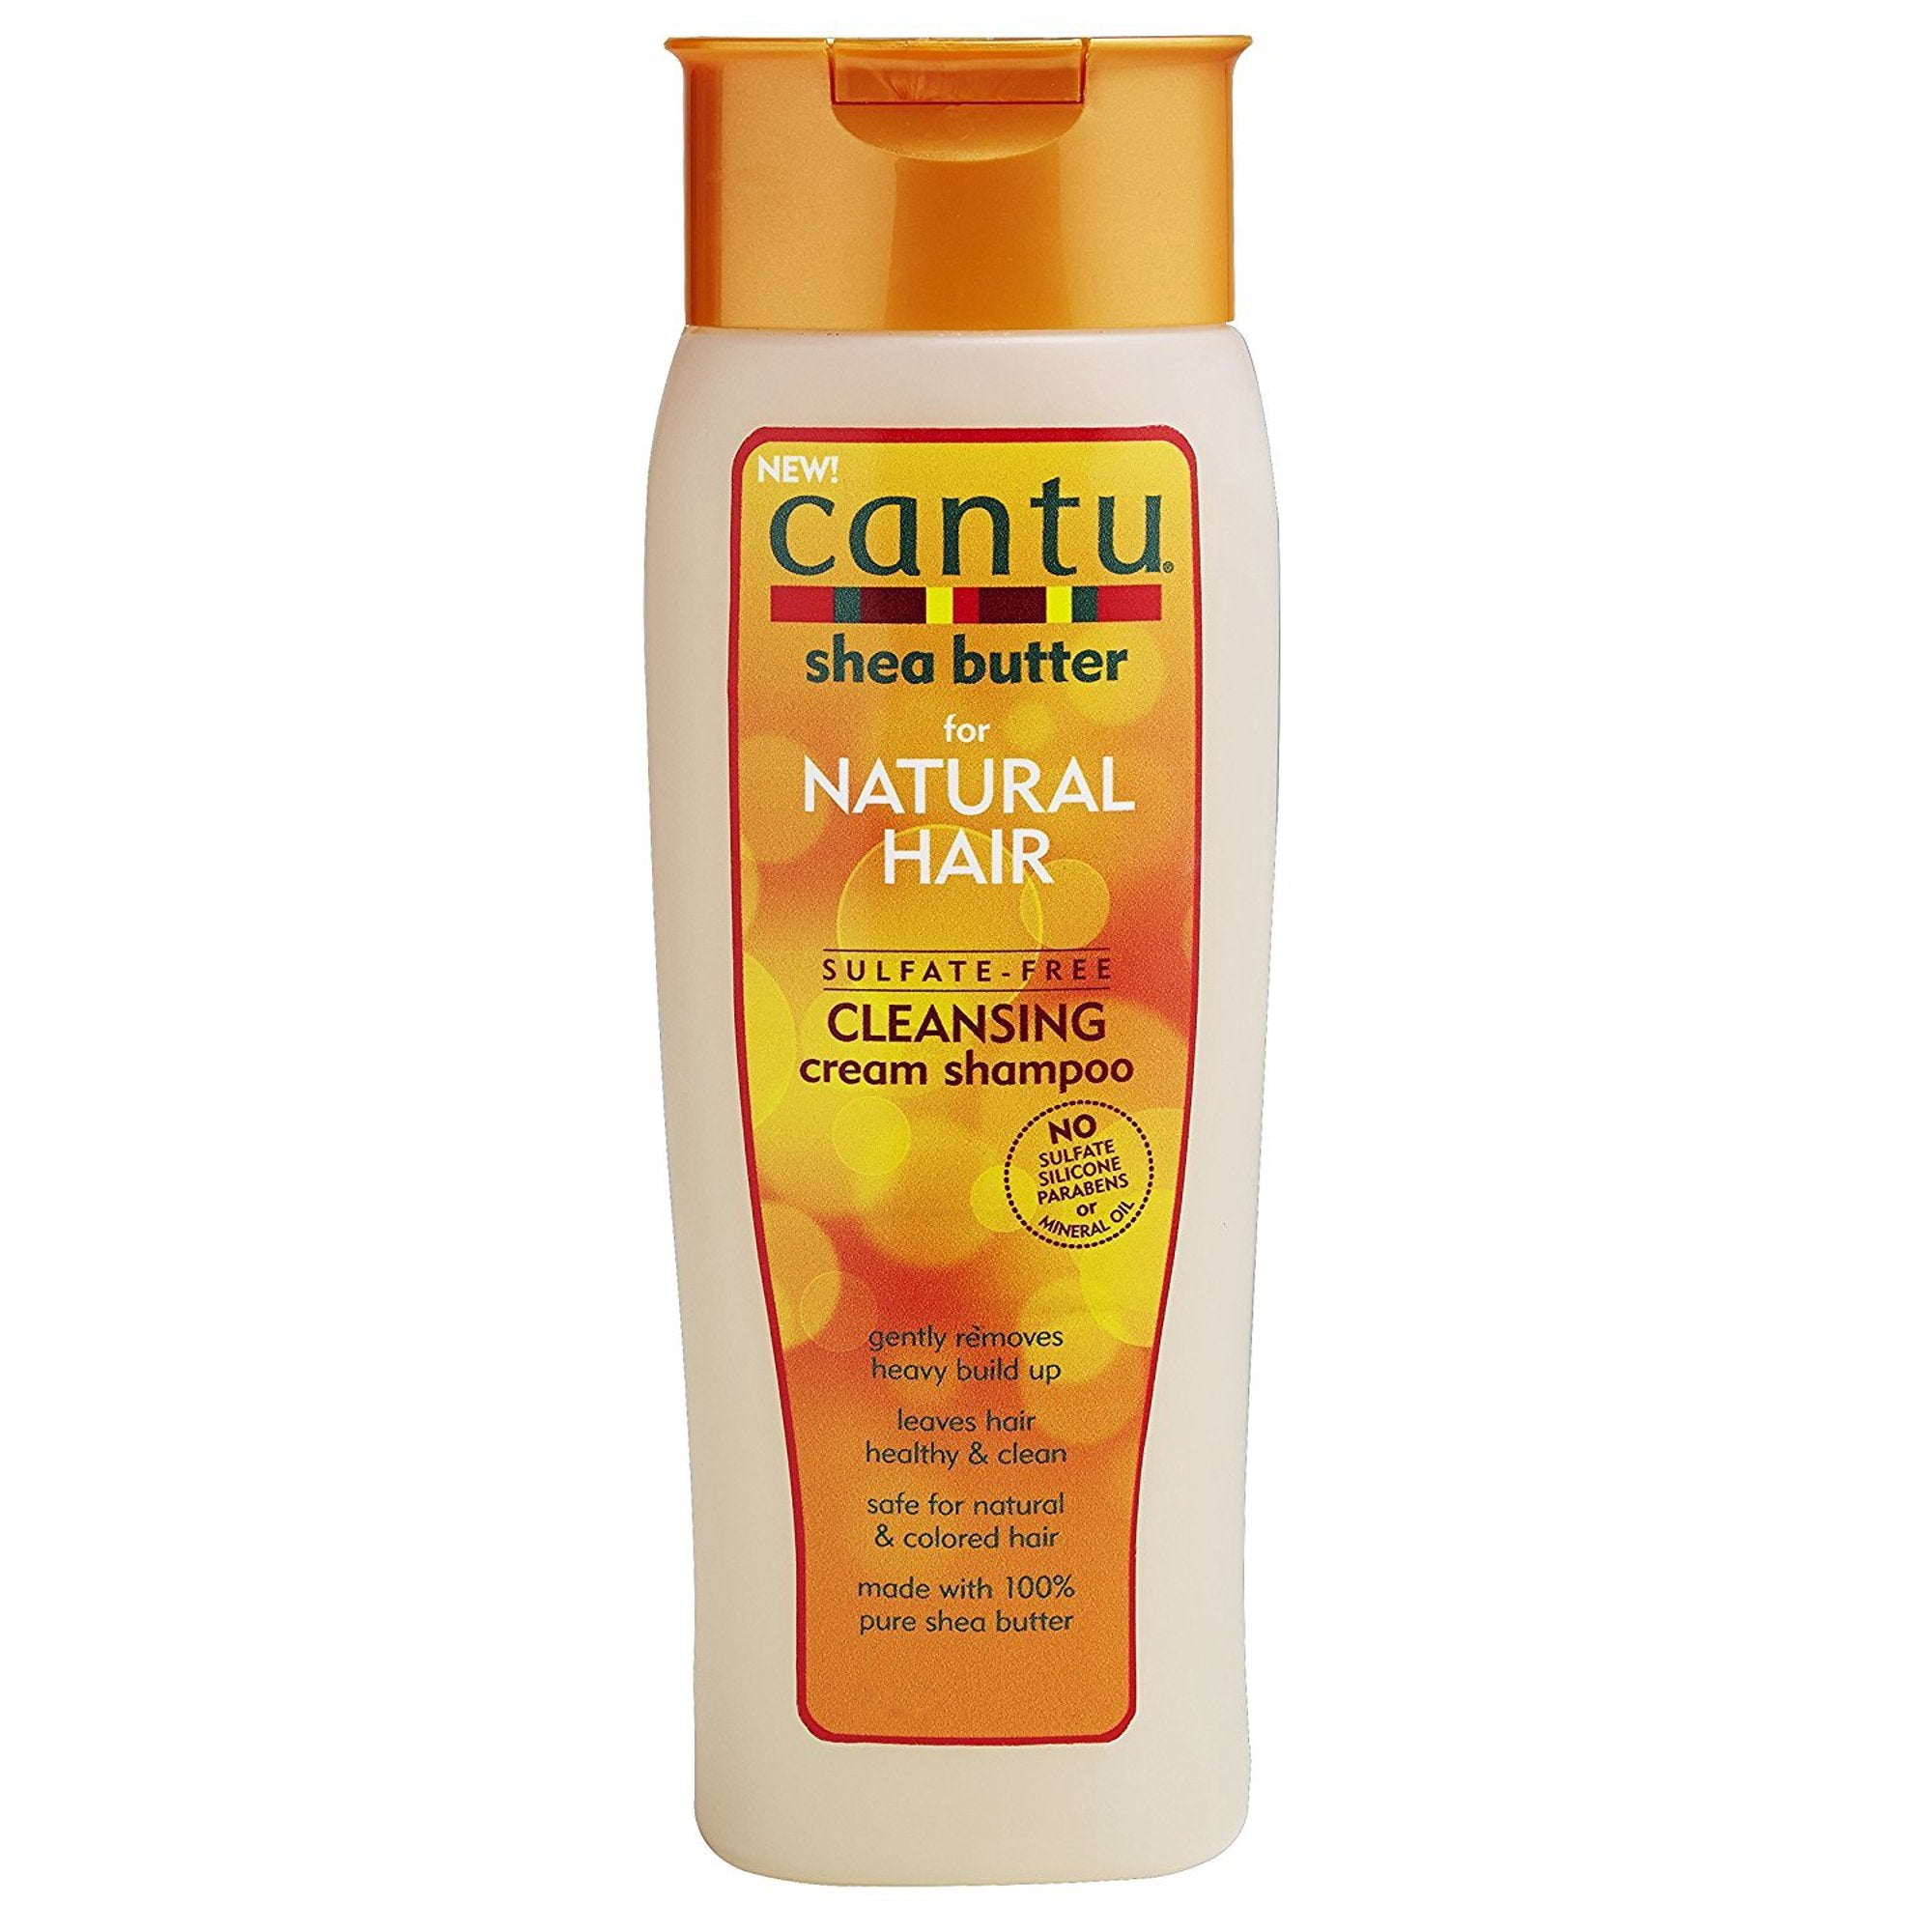 Cantu Shea Butter For Natural Hair Cleansing Cream Shampoo, 13.5 Oz